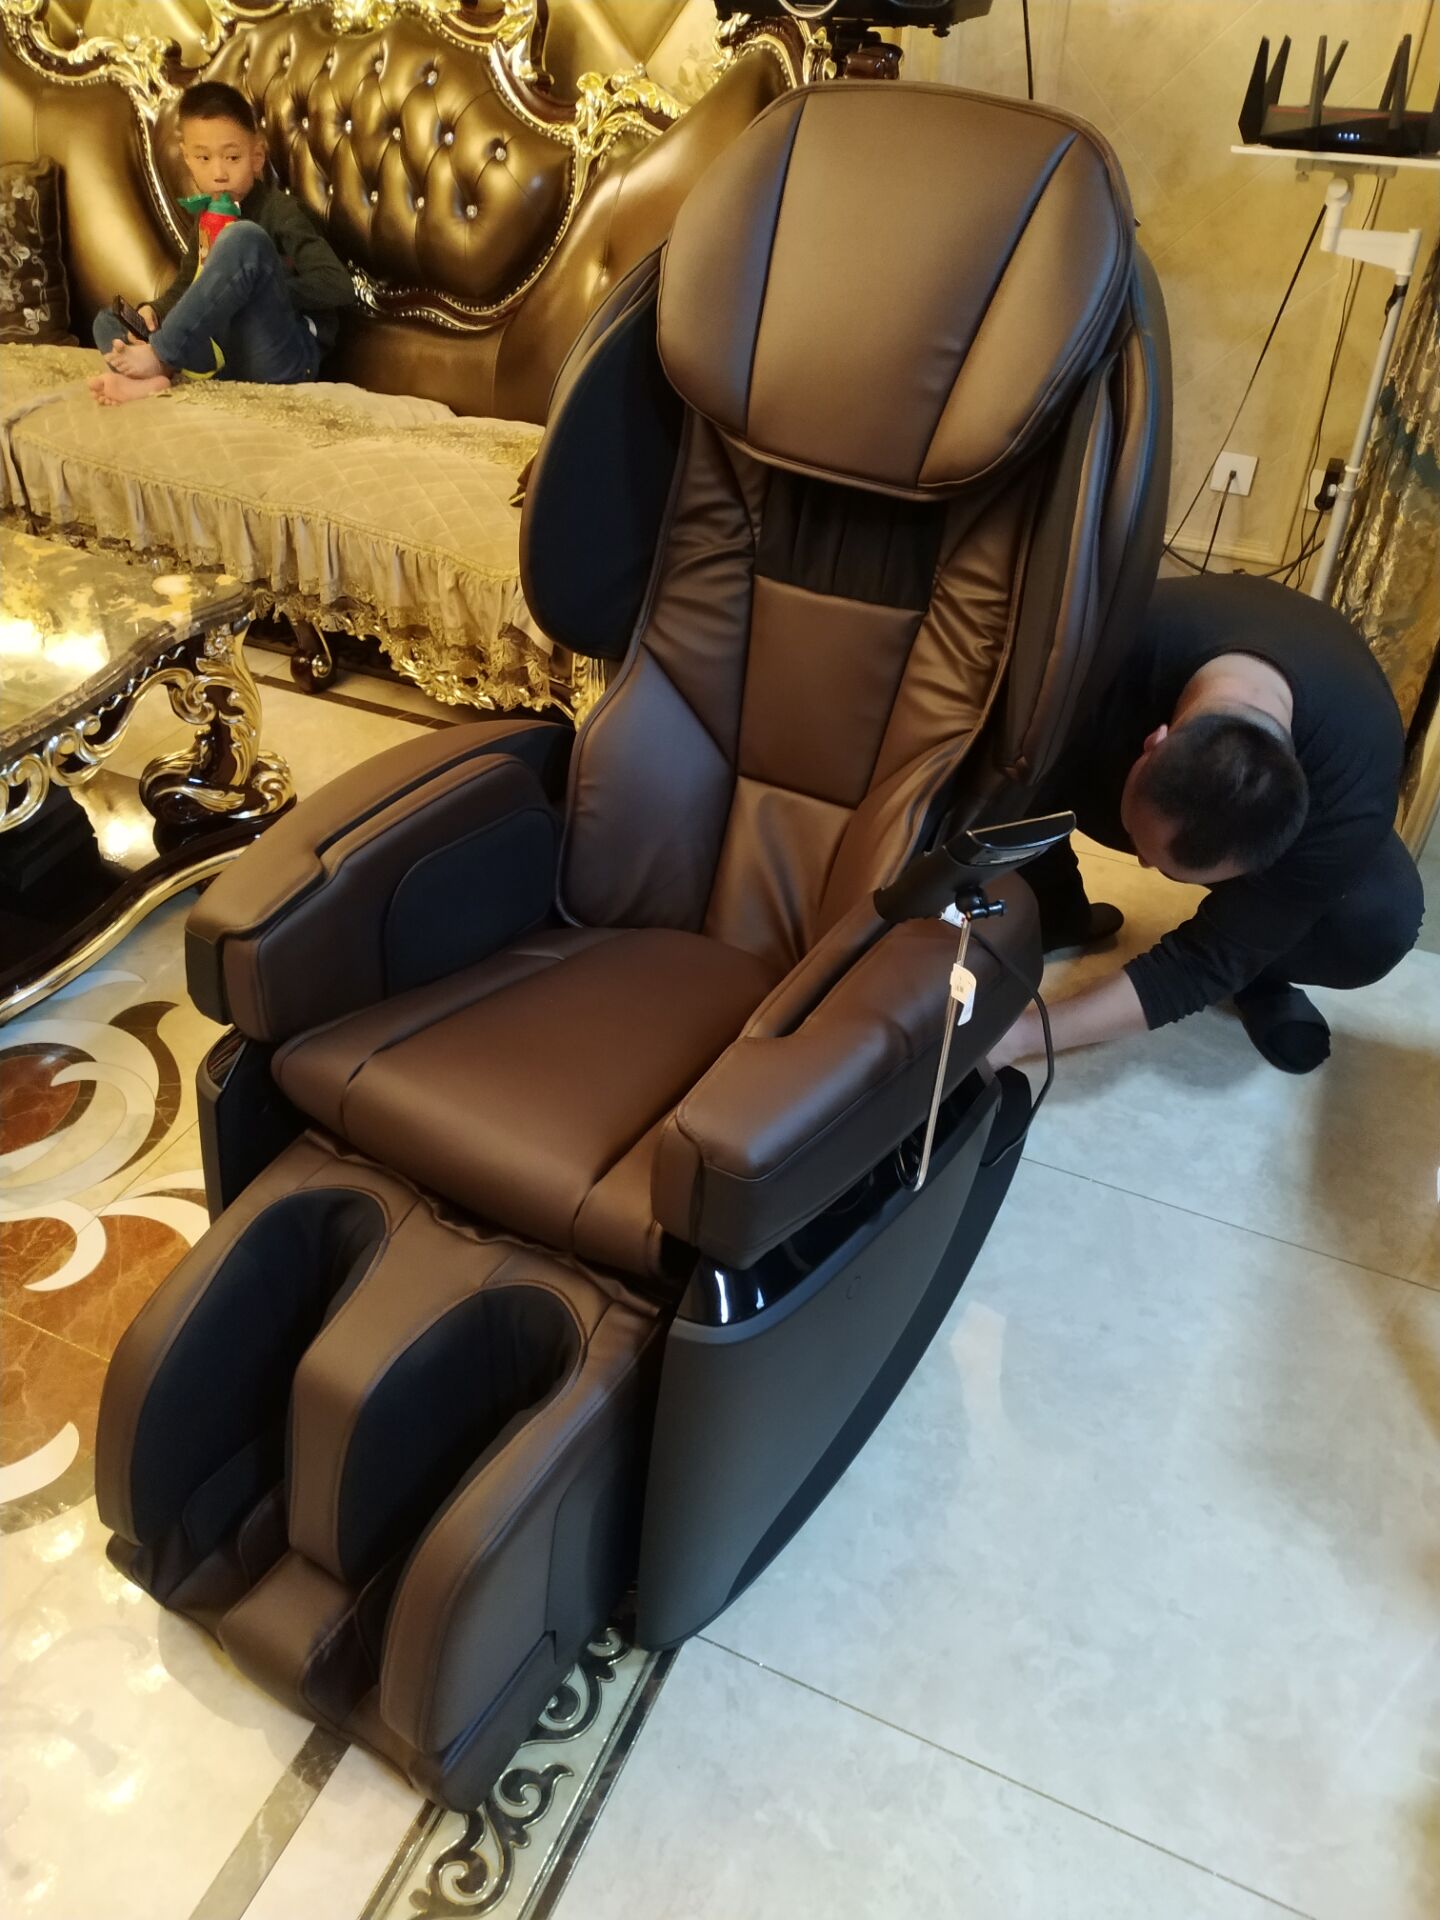 Japan Imported Fujiiryoki Fuji Jp 1100 Massage Chair Massage Chair